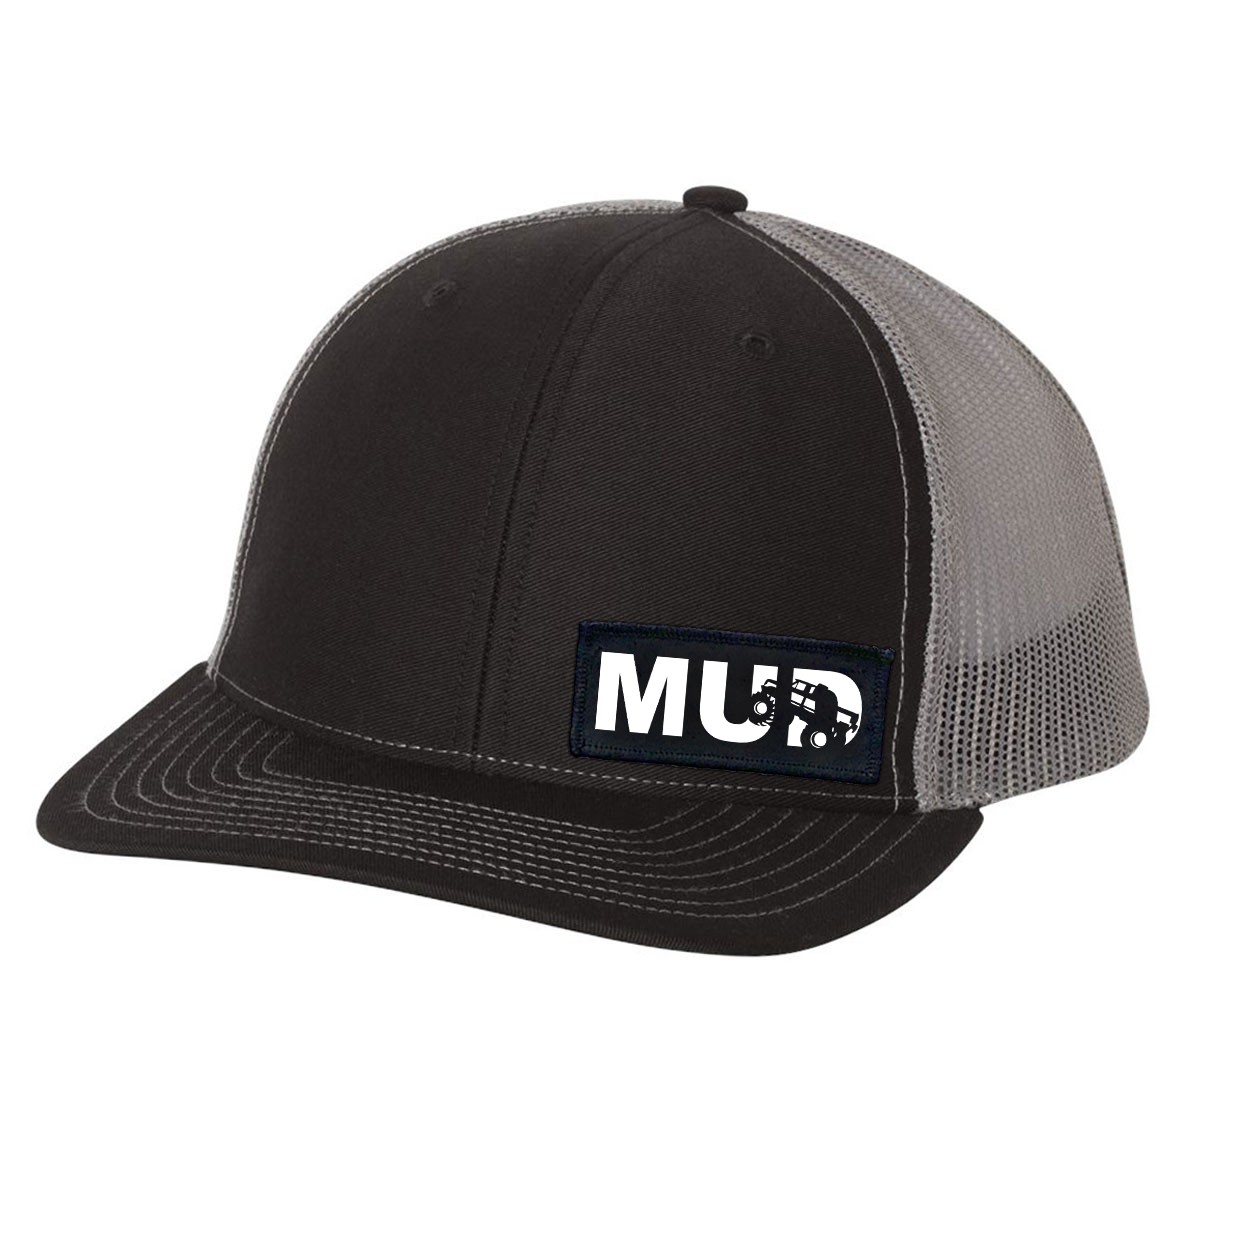 Mud Truck Logo Night Out Woven Patch Snapback Trucker Hat Black/Gray (White Logo)